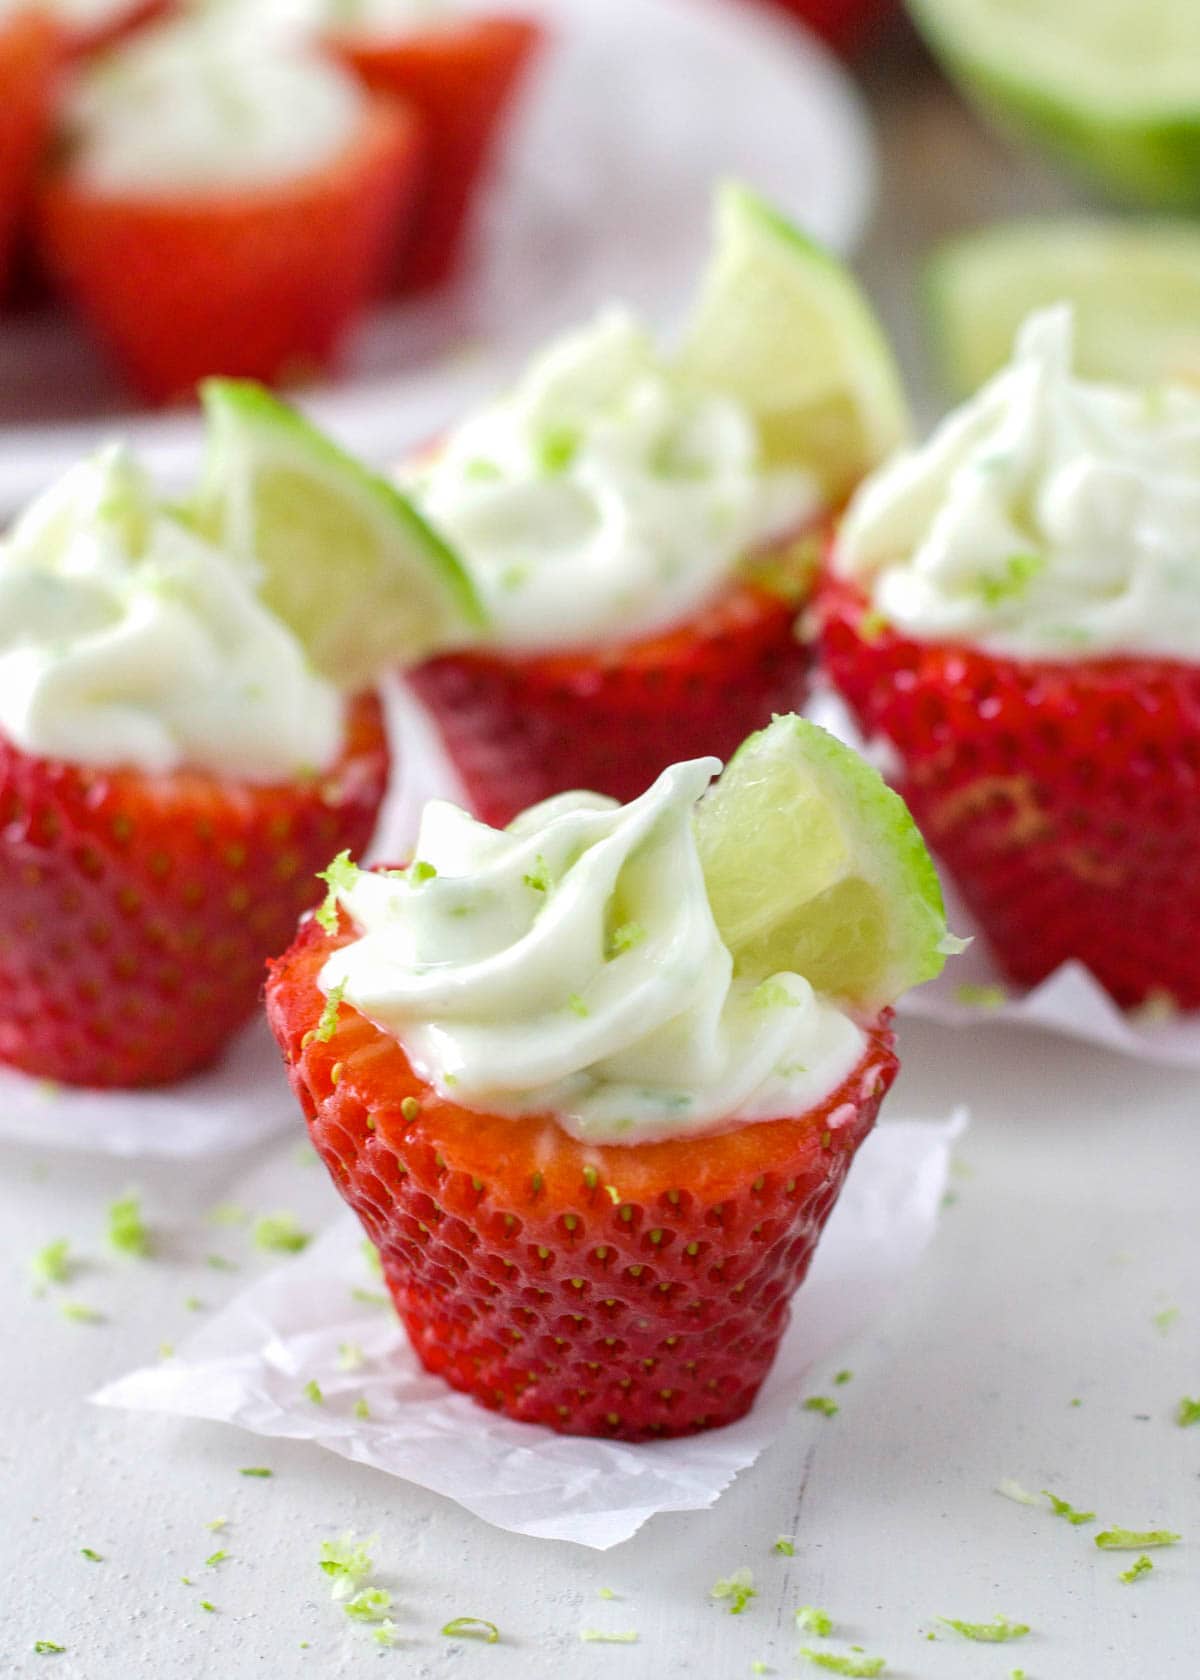 https://www.maebells.com/wp-content/uploads/2015/03/The-Best-Stuffed-Strawberries-Key-Lime-Stuffed-Strawberries.jpg